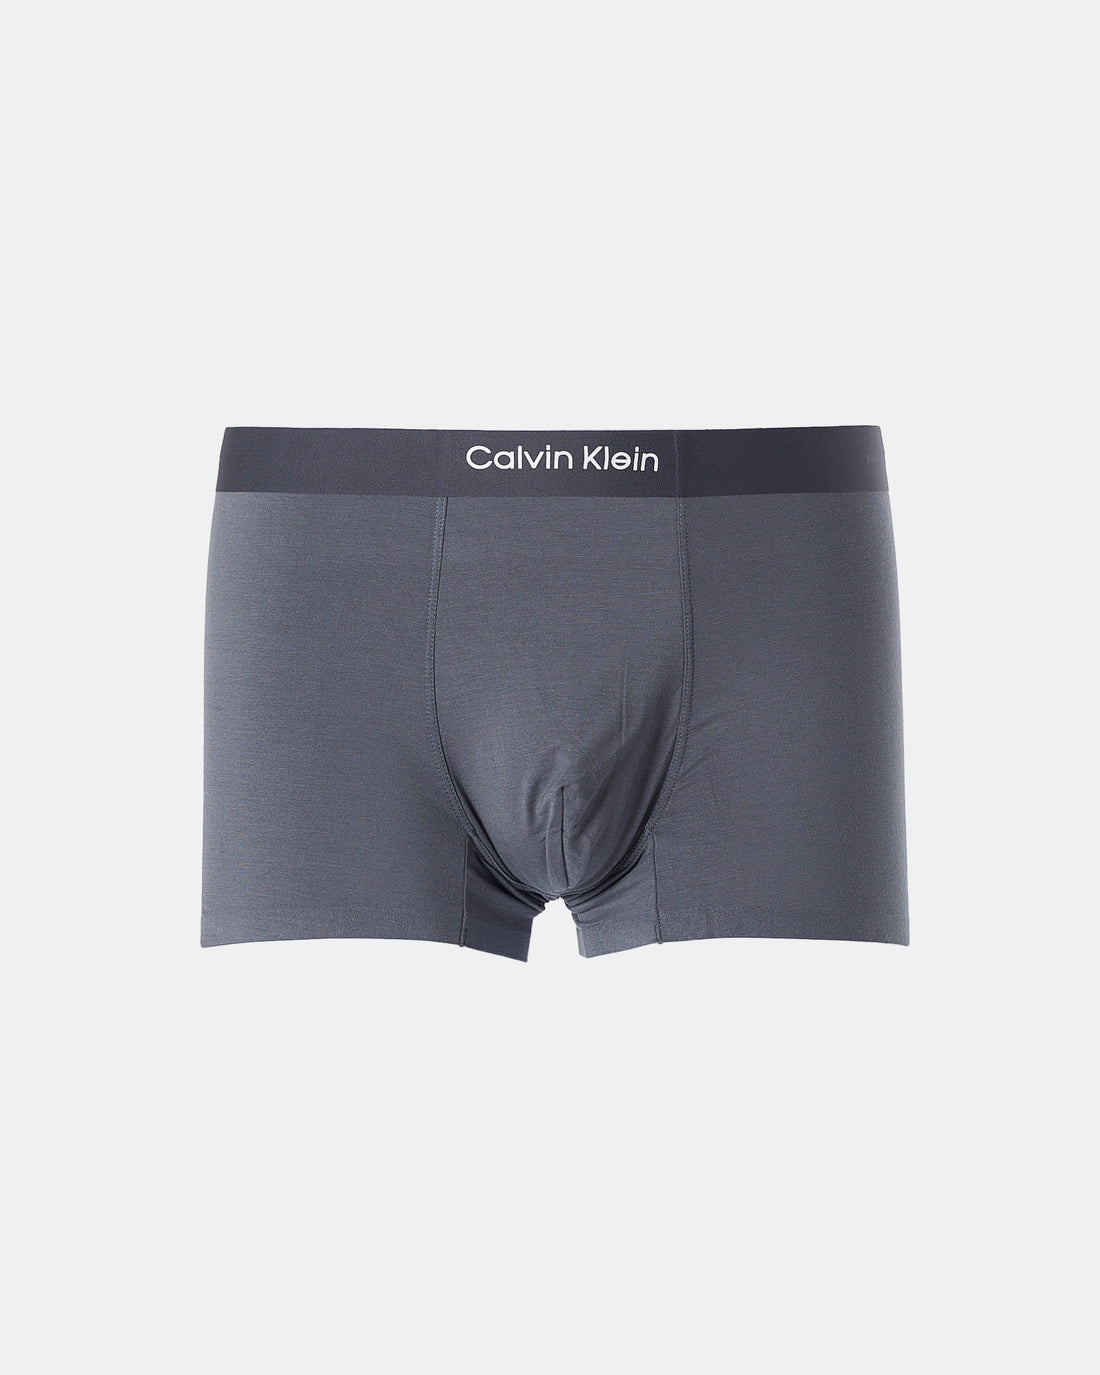 CK Plain Color Men Dark Grey Underwear 6.90